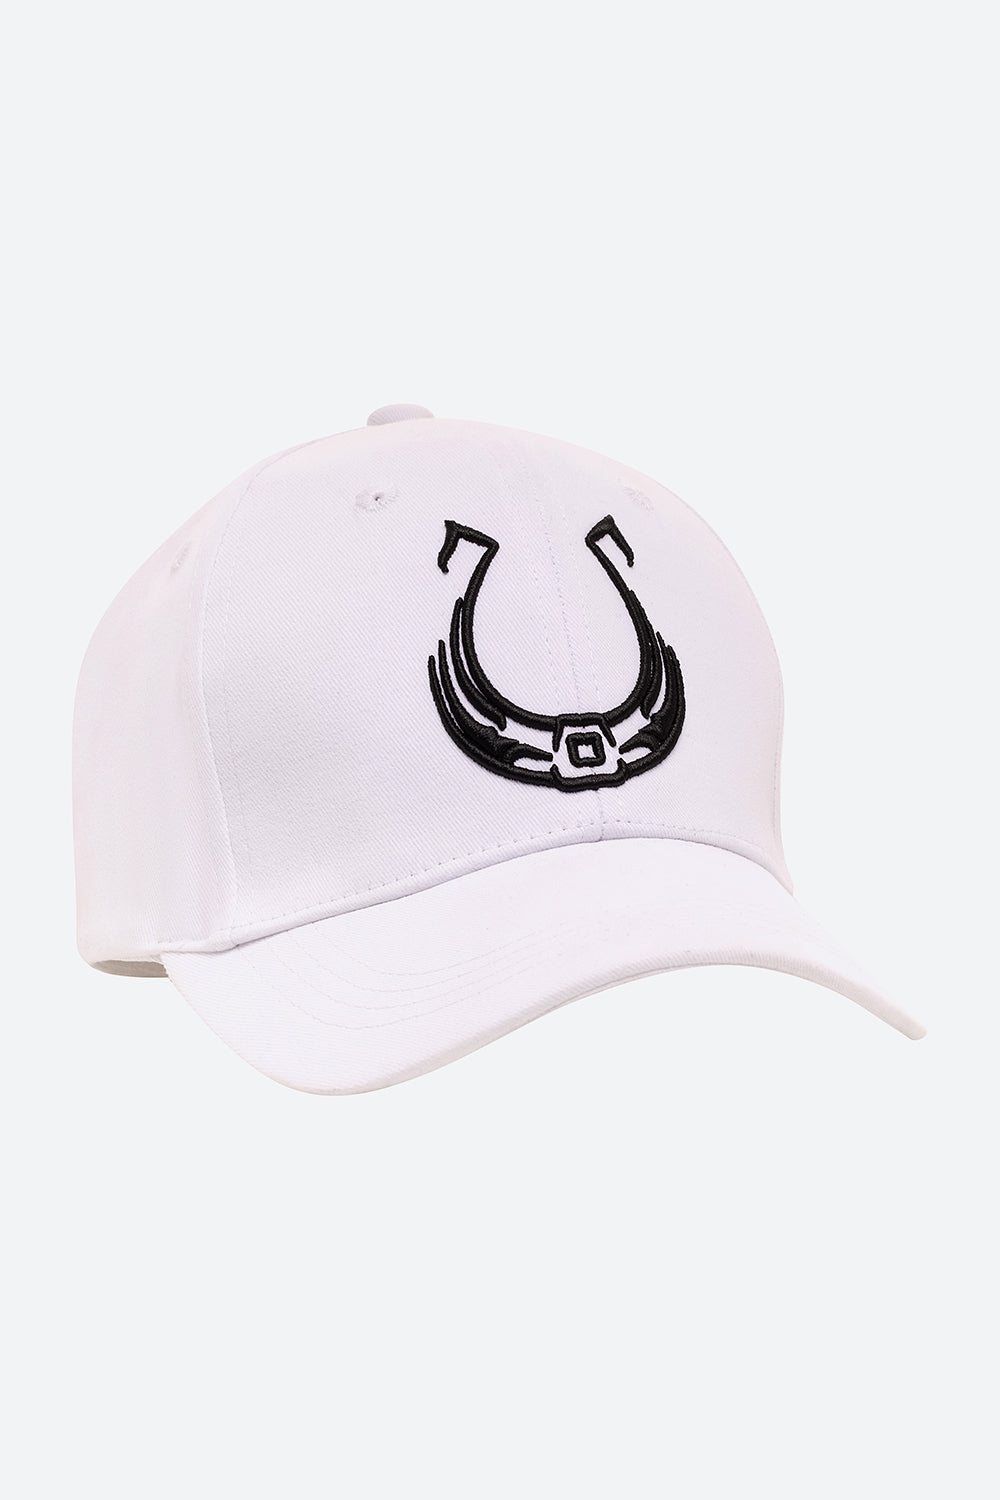 Iconic Horseshoe Cap in White